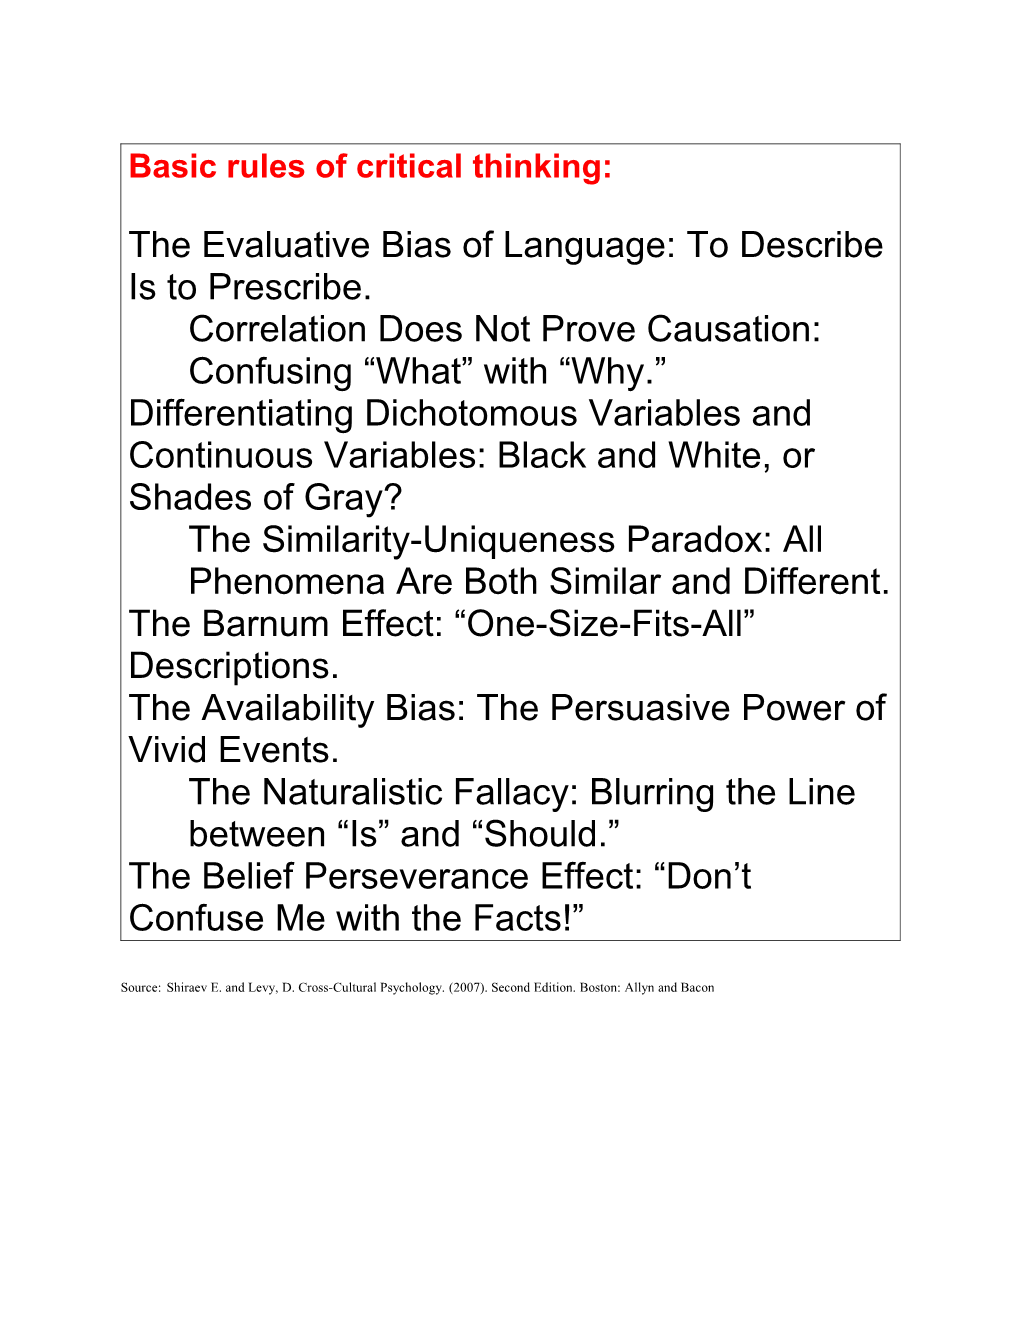 Basic Rules of Critical Thinking